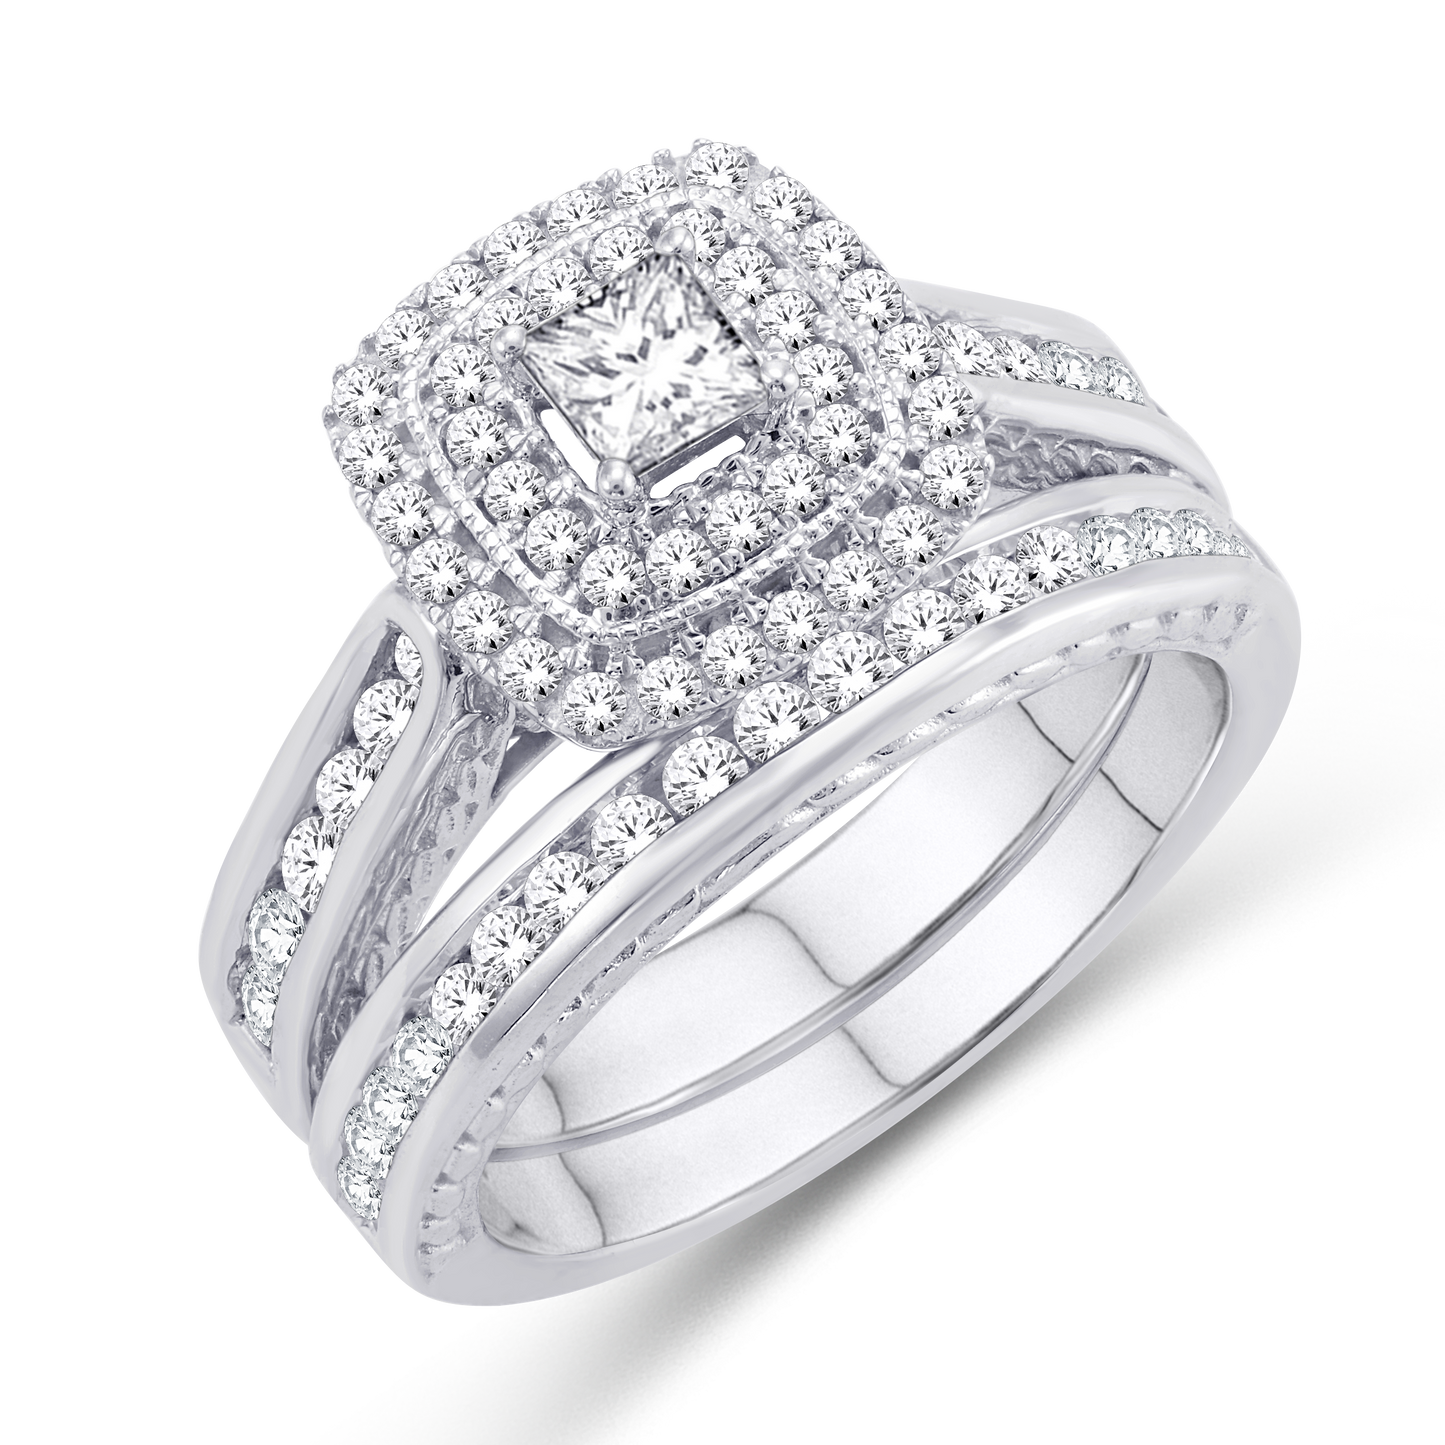 14k white gold 1.00ctw Princess cut double Halo engagement ring set